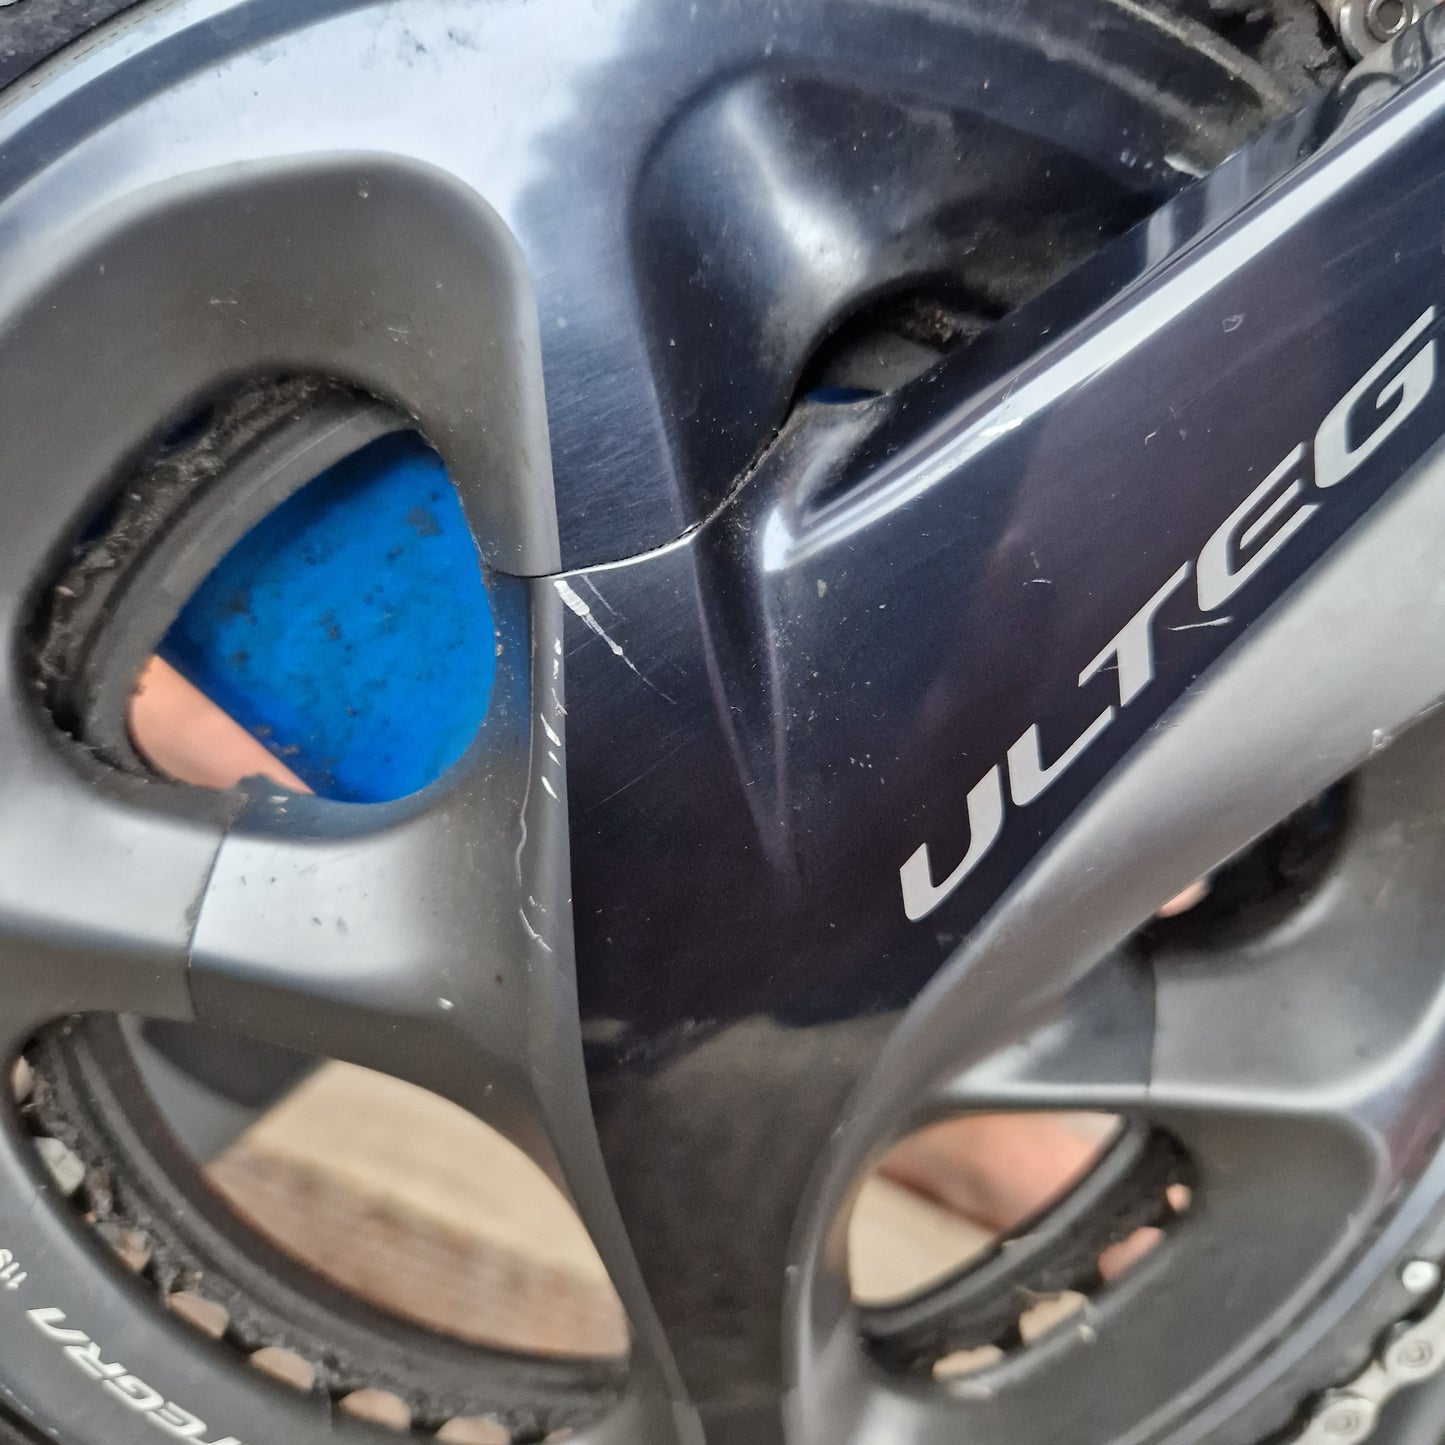 Giant TCR Advanced Pro 2 | Carbon Disc Road Bike | Ultegra | M/L 56cm